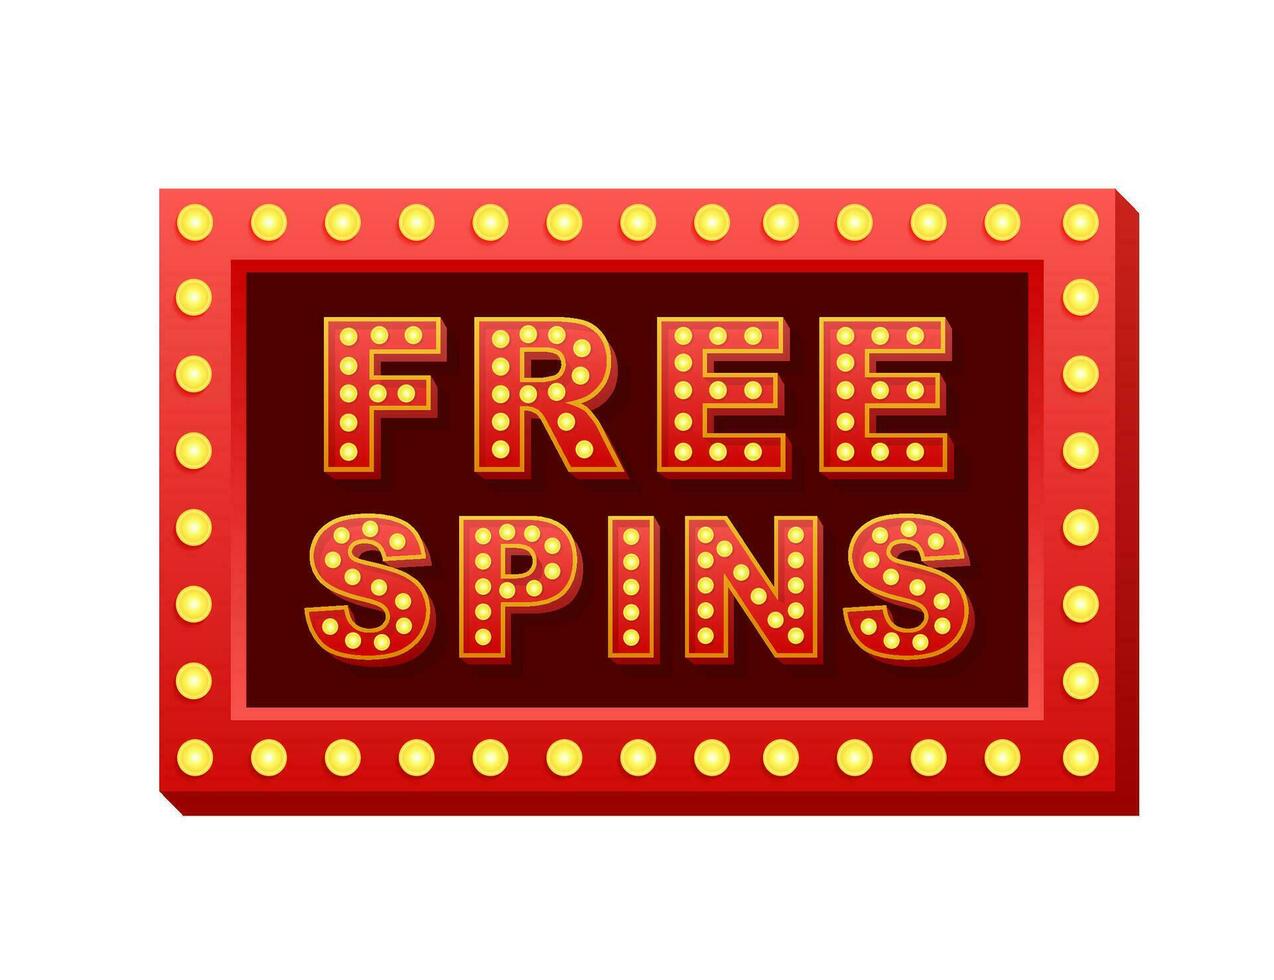 Casino free spins slots. Online casino. Gambling casino games. Vector stock illustration.